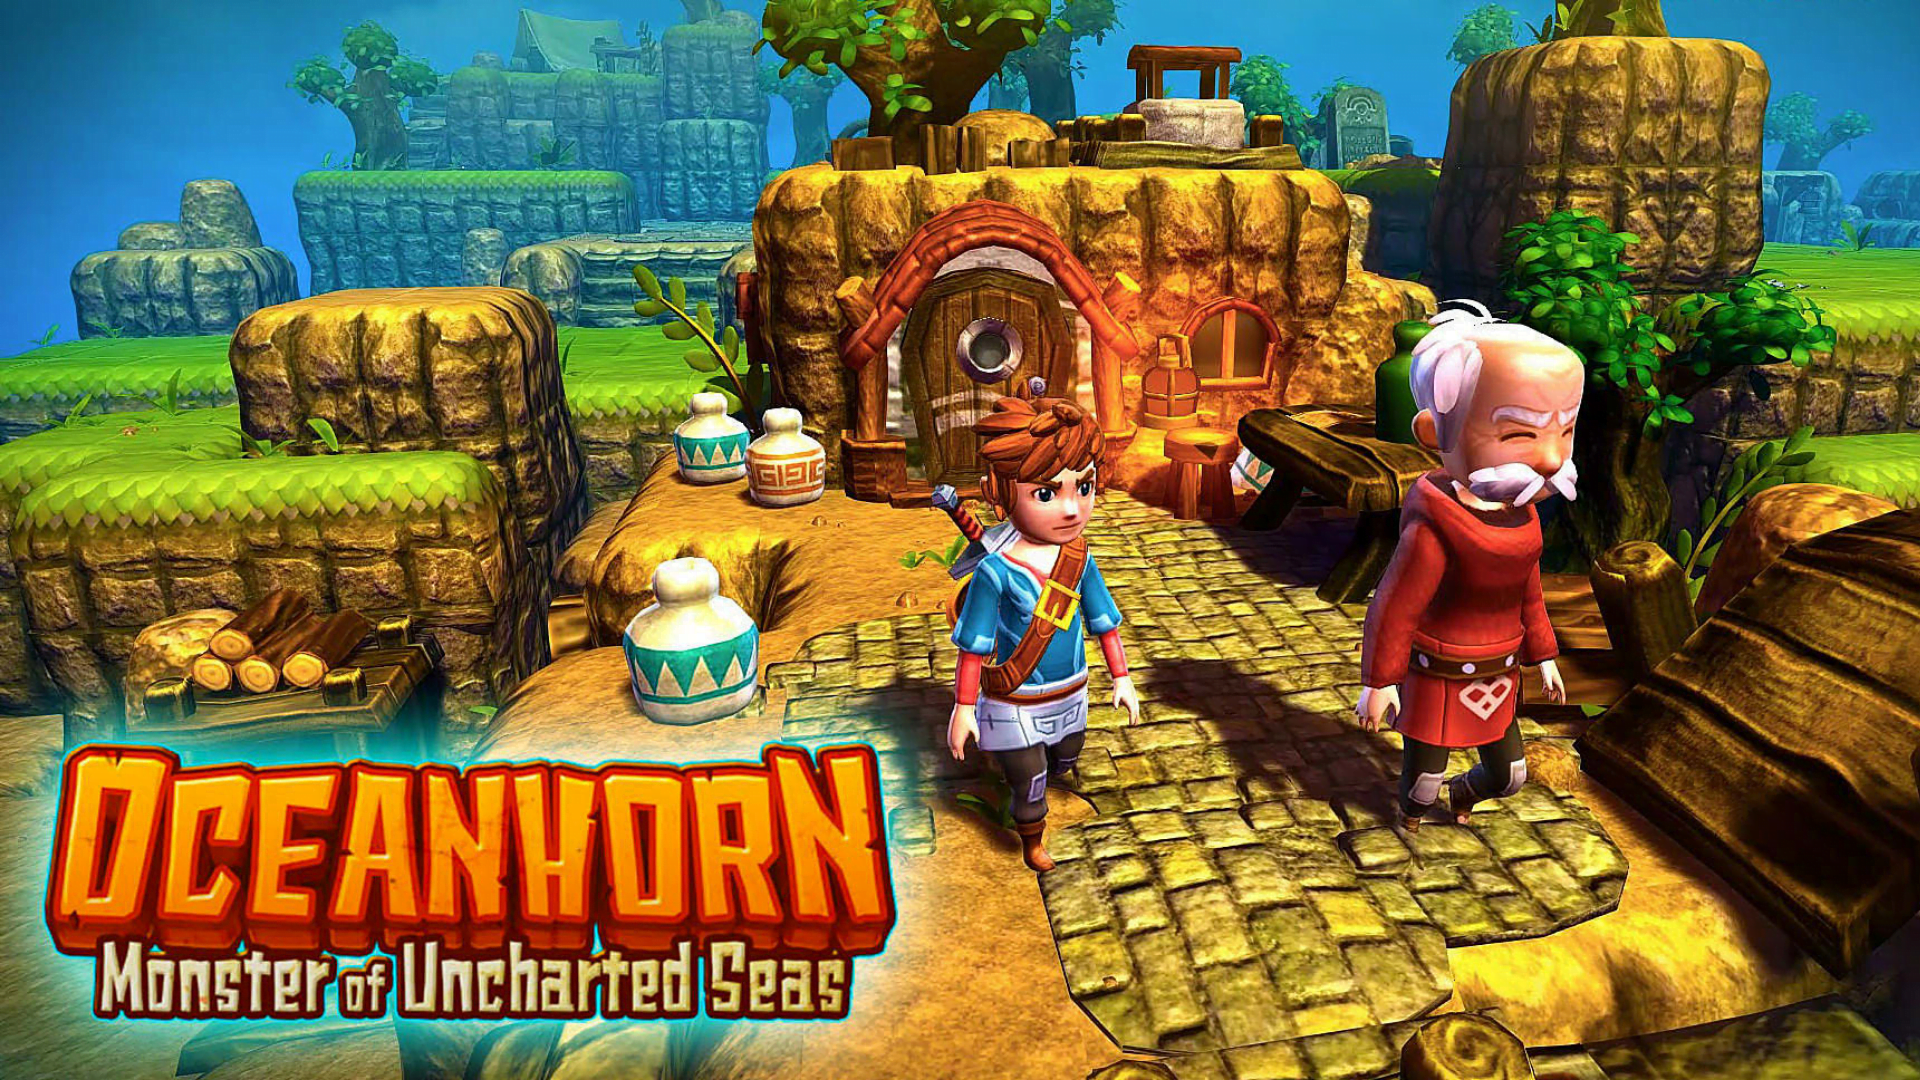 Review Game Oceanhorn: Monster of Uncharted Seas